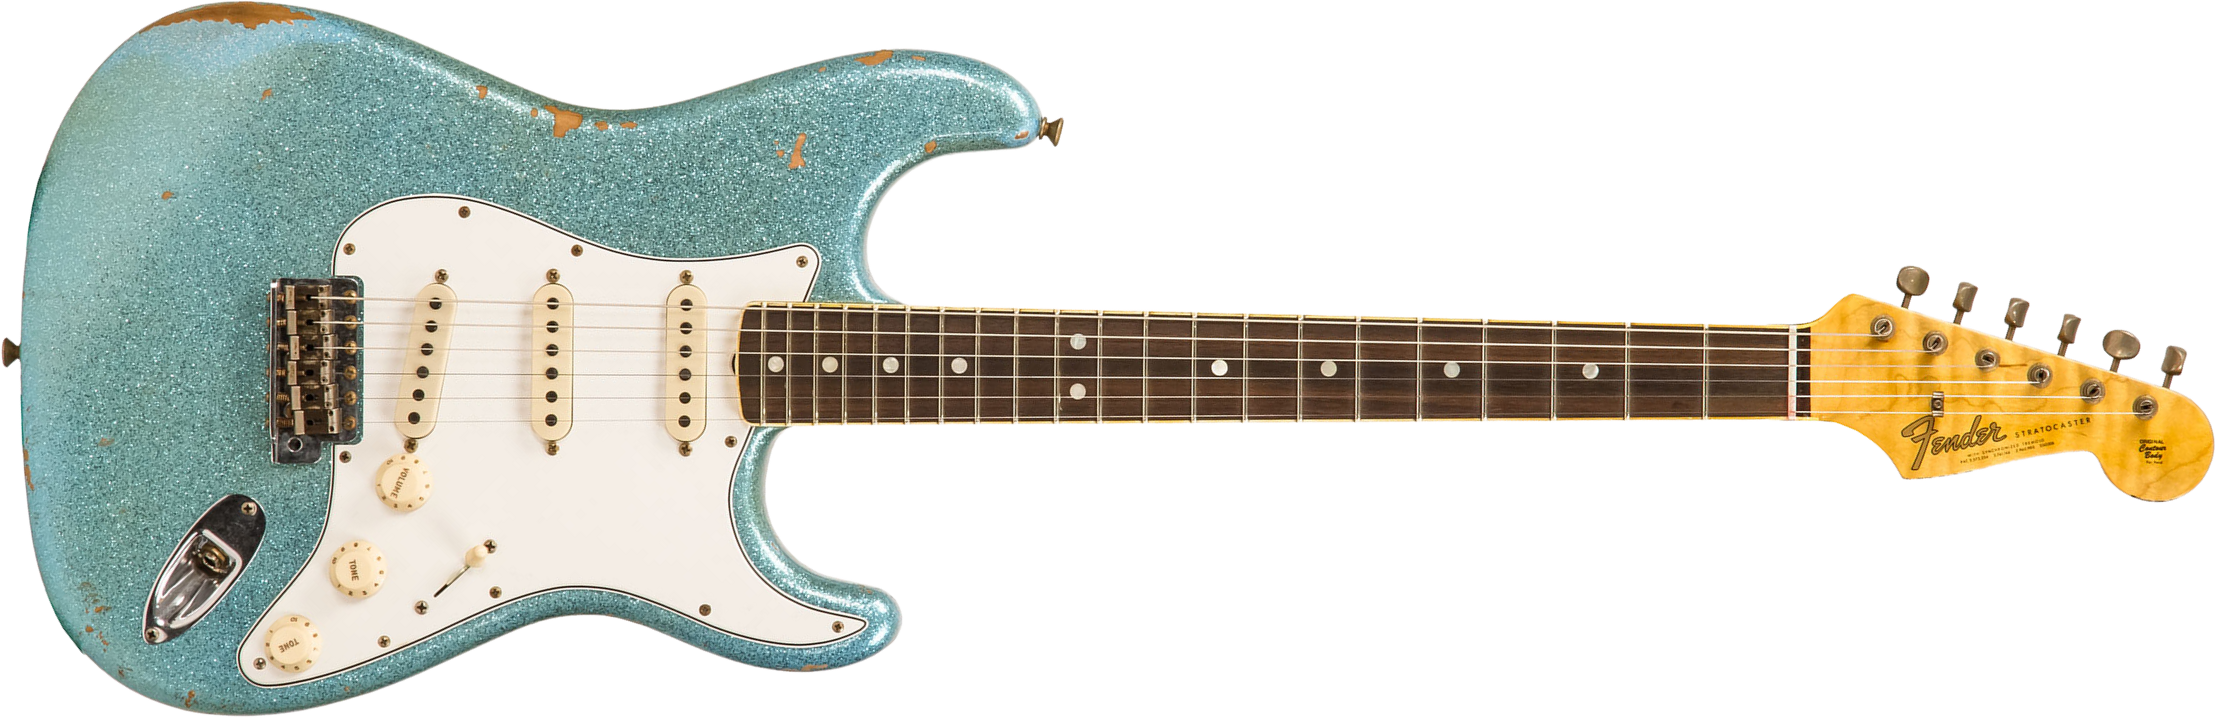 Fender Custom Shop Strat 1965 Ltd Usa Rw #cz548544 - Relic Daphne Blue Sparkle - Guitarra eléctrica con forma de str. - Main picture